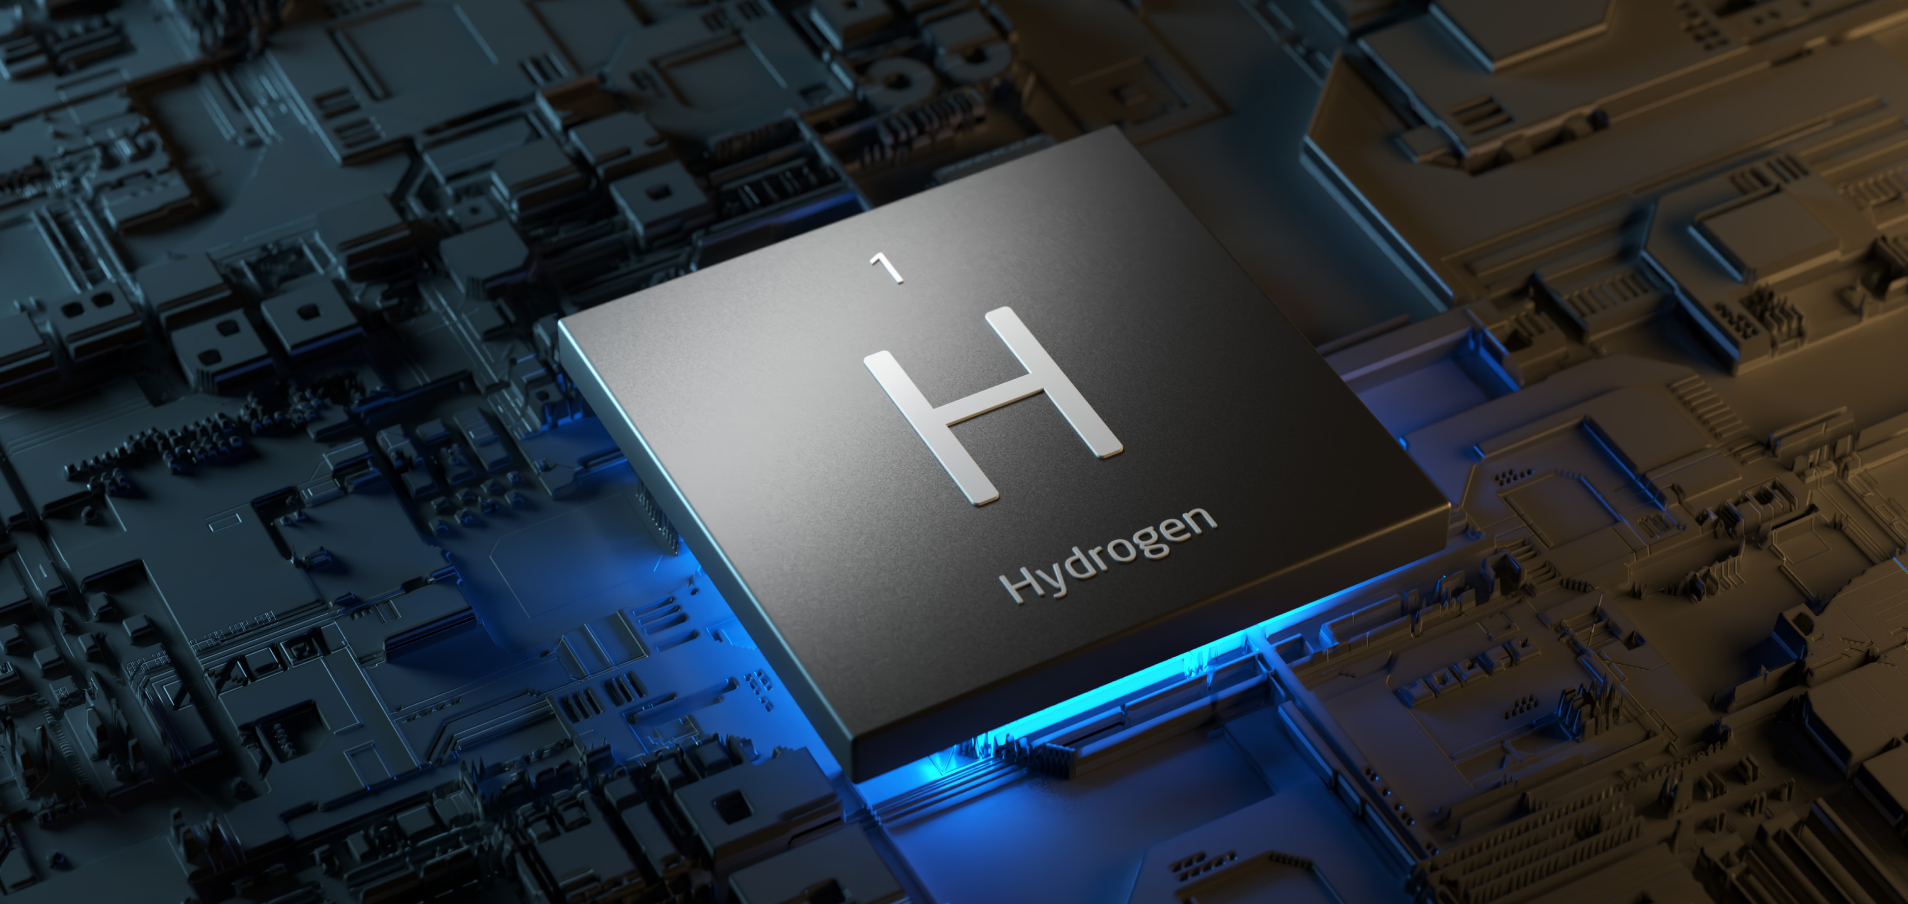 Hydrogen Fuel cell